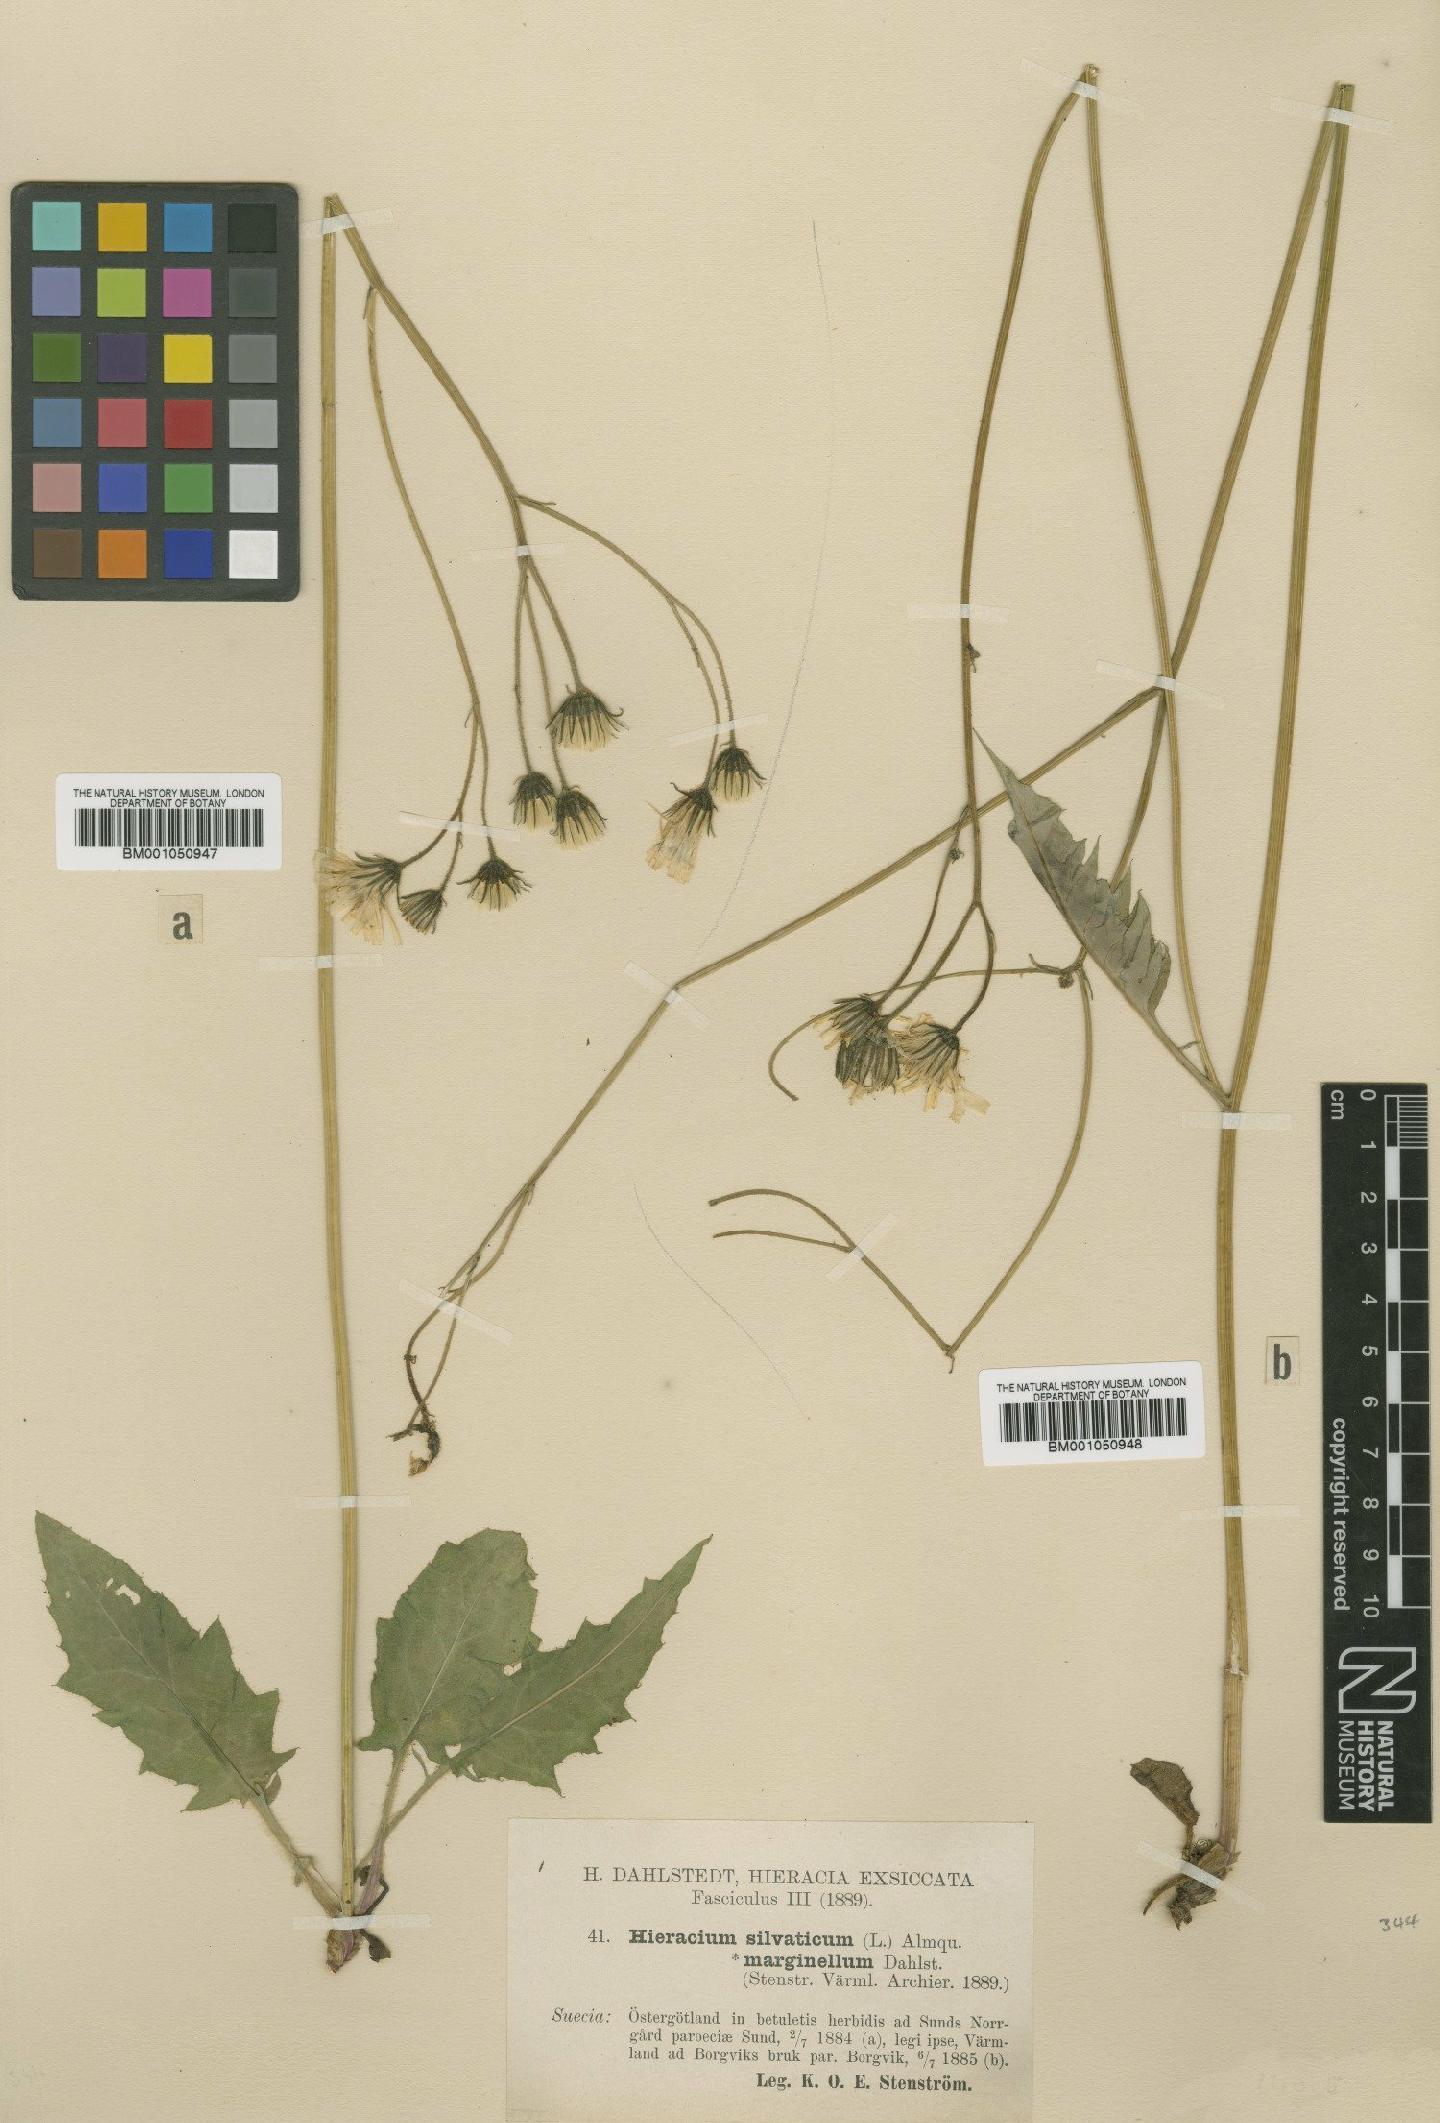 To NHMUK collection (Hieracium sagittatum subsp. marginellum (Dahlst.) Zahn; TYPE; NHMUK:ecatalogue:2413685)